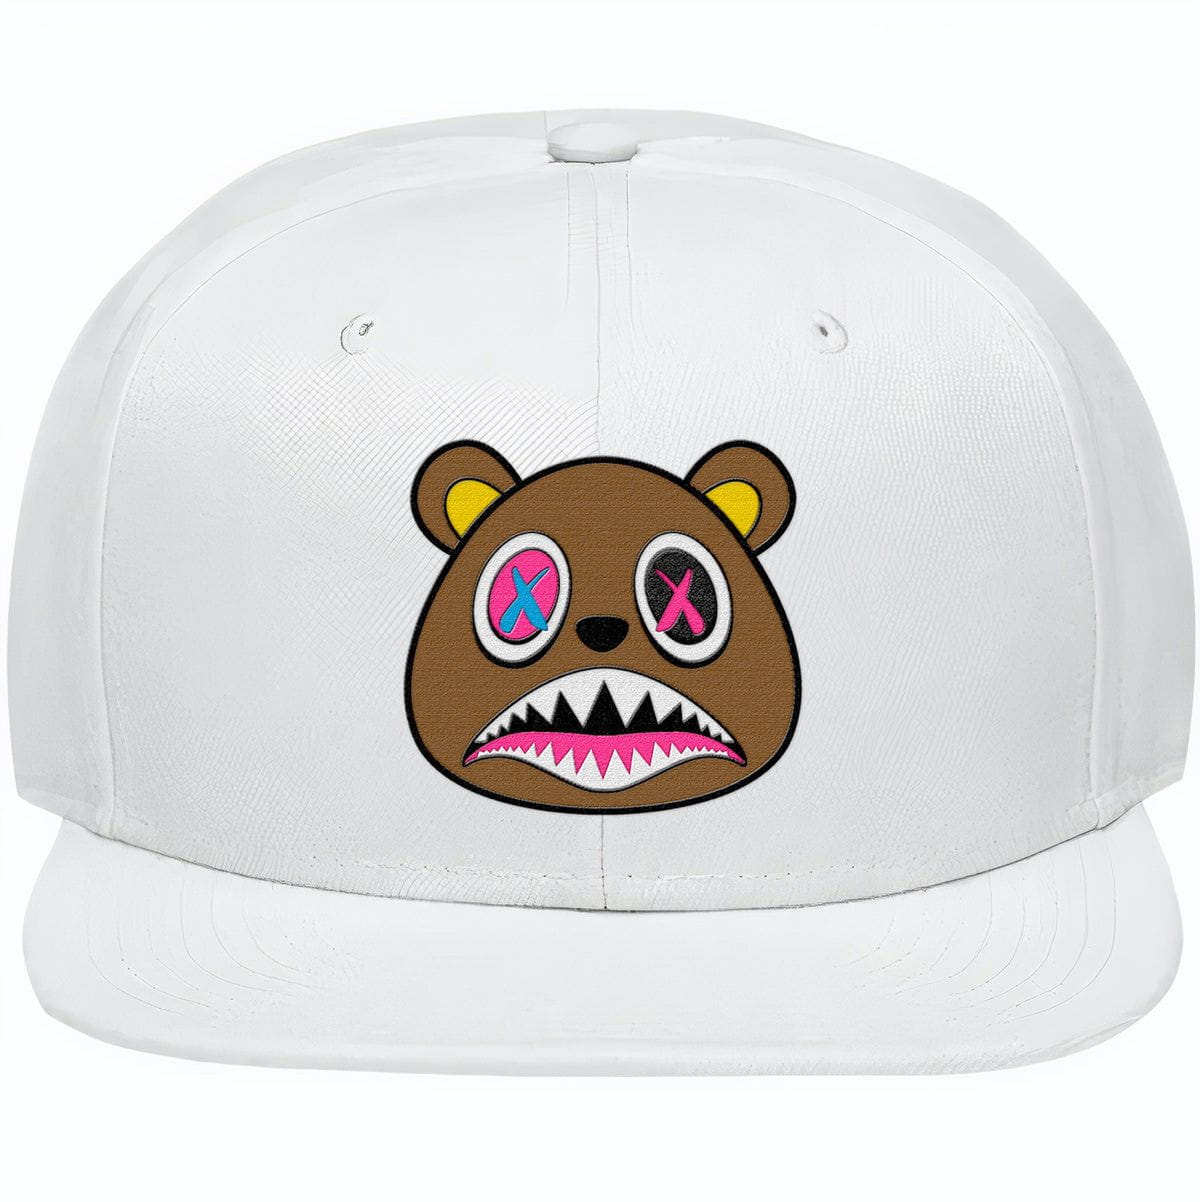 Crazy Baws - White Snapback Hat